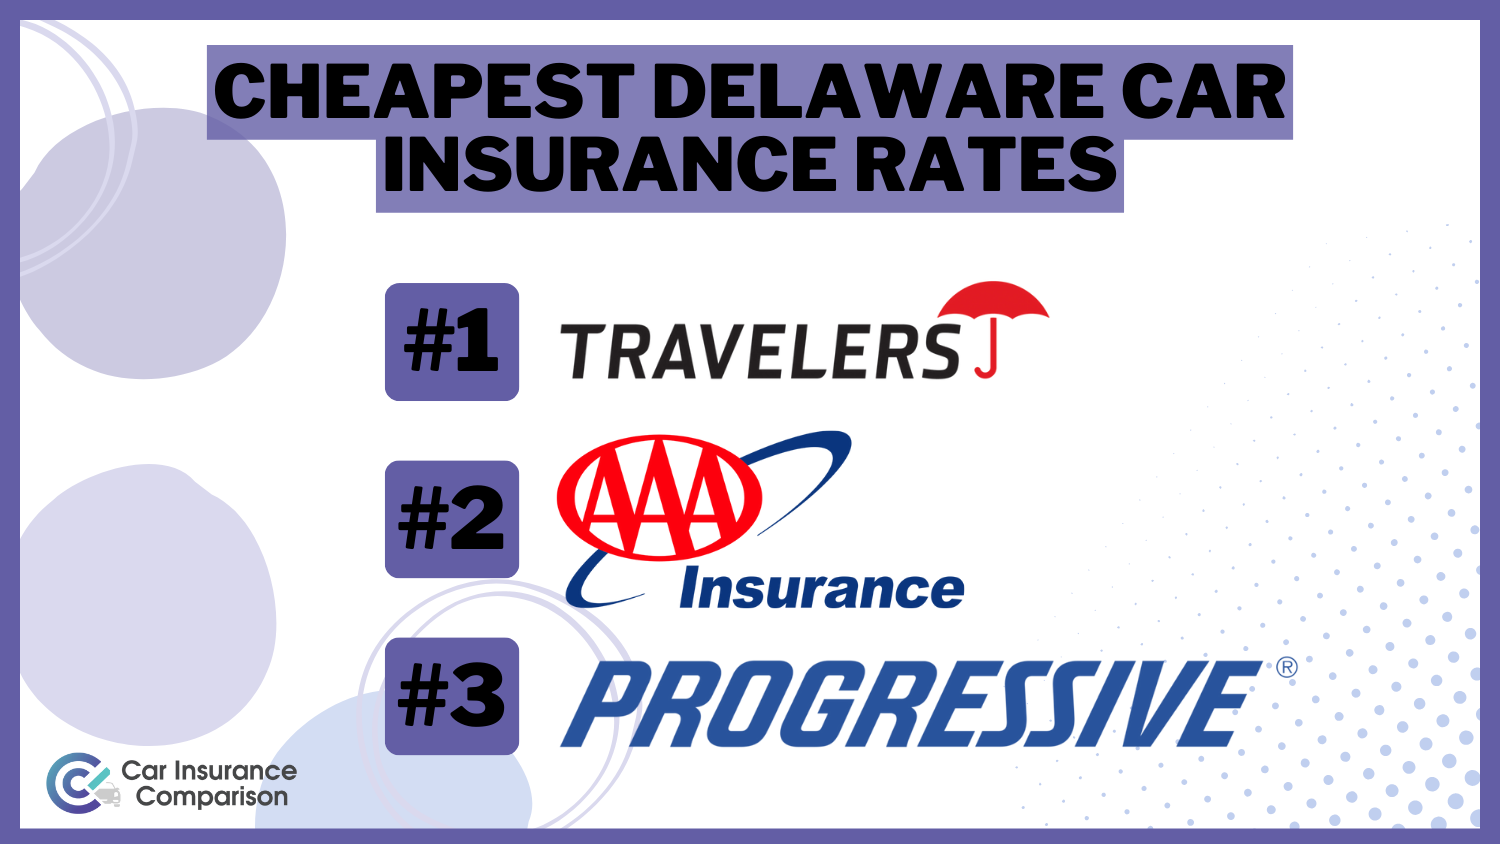 Cheapest Delaware Car Insurance Rates: Travelers, AAA, Progressive